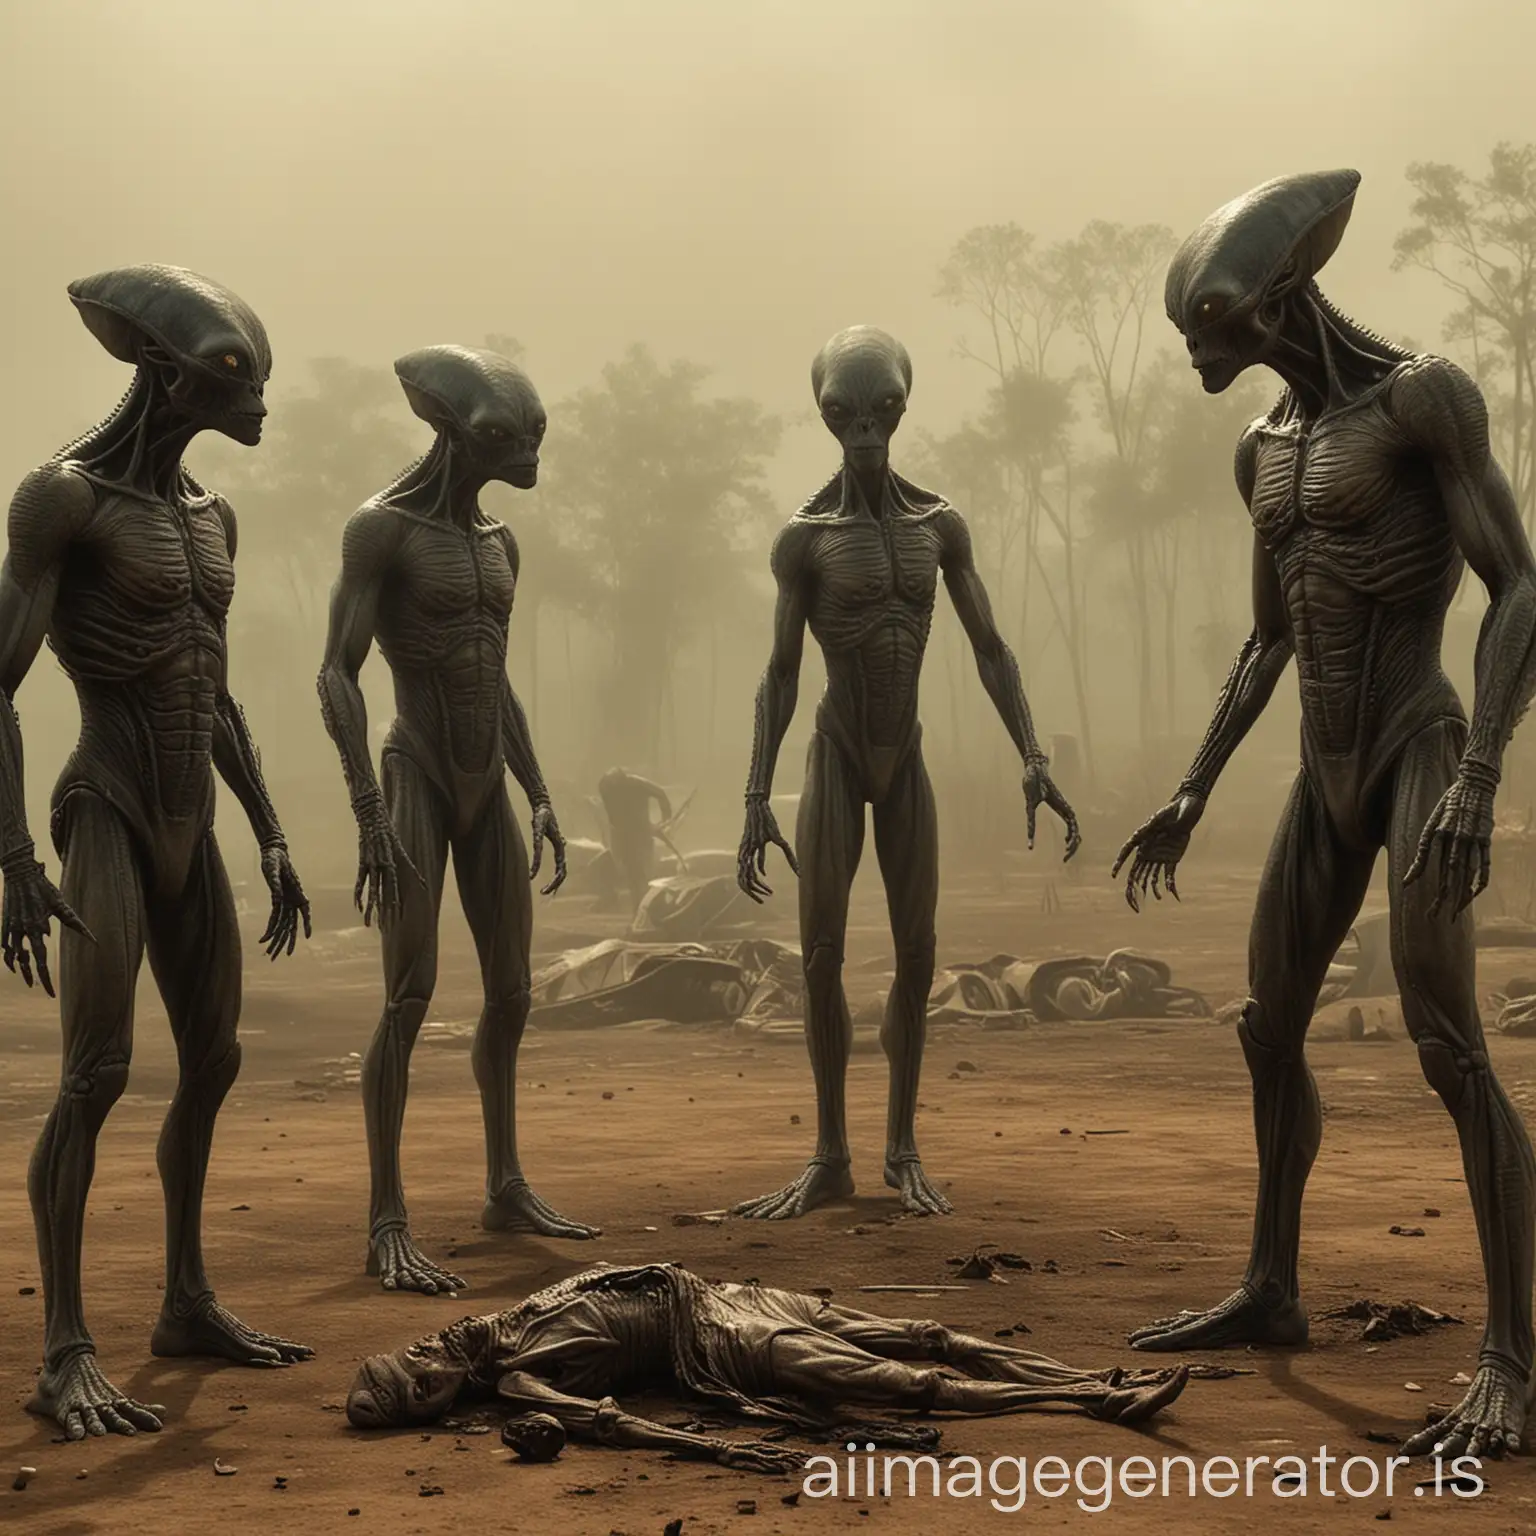 Alien-Sacrifice-Ritual-Four-Extraterrestrials-Performing-Sacrificial-Rite